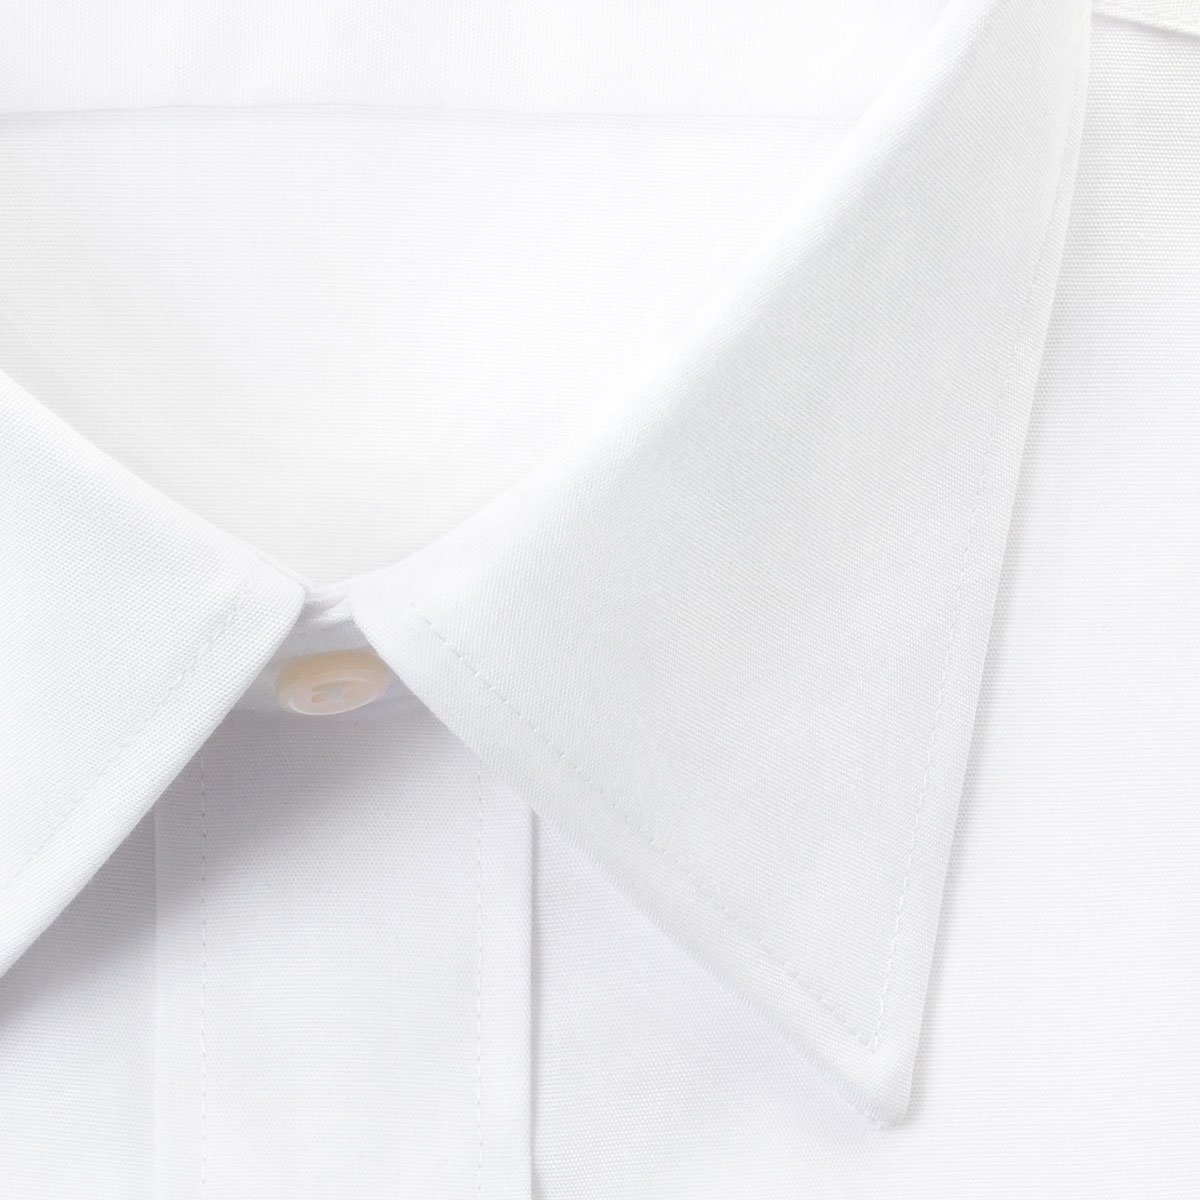 CHOYA SHIRT FACTORY 長袖レギュラーカラー ホワイト ワイシャツ SBTrecommend